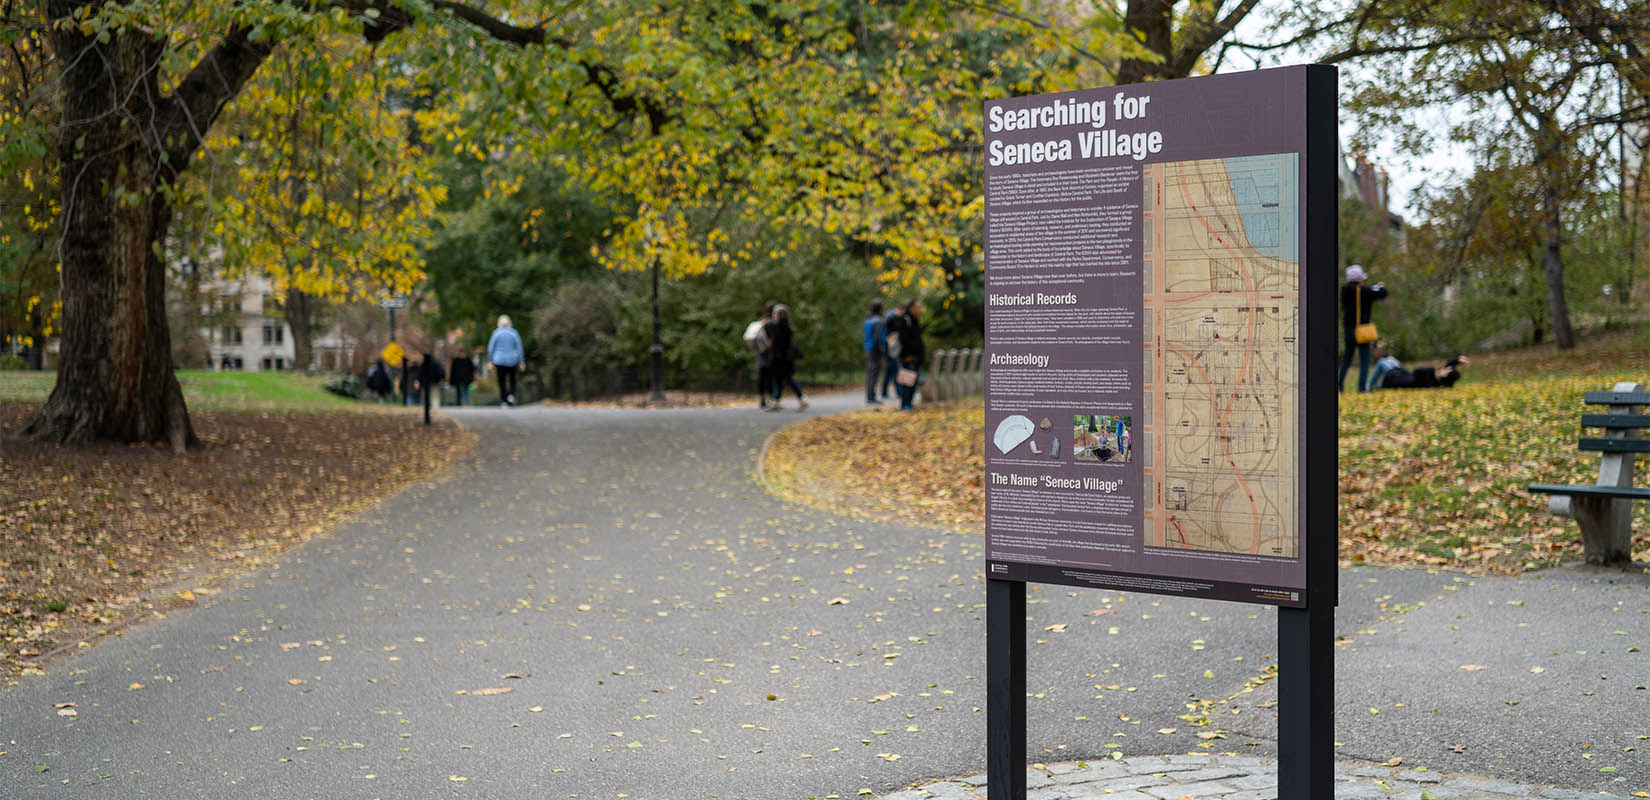 An interpretive sign at the Seneca Village site in Central Park